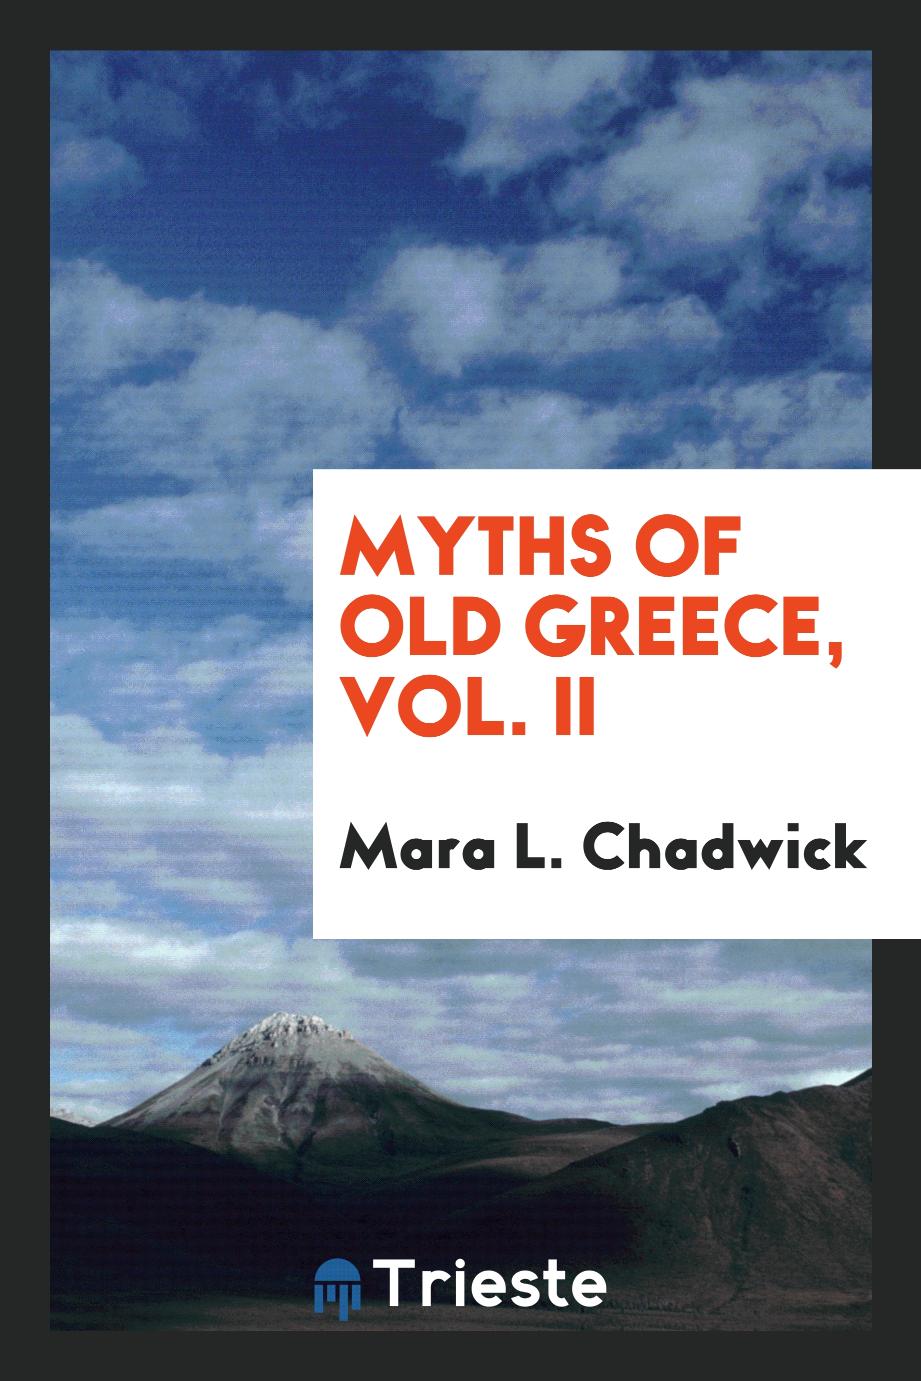 Myths of old Greece, Vol. II